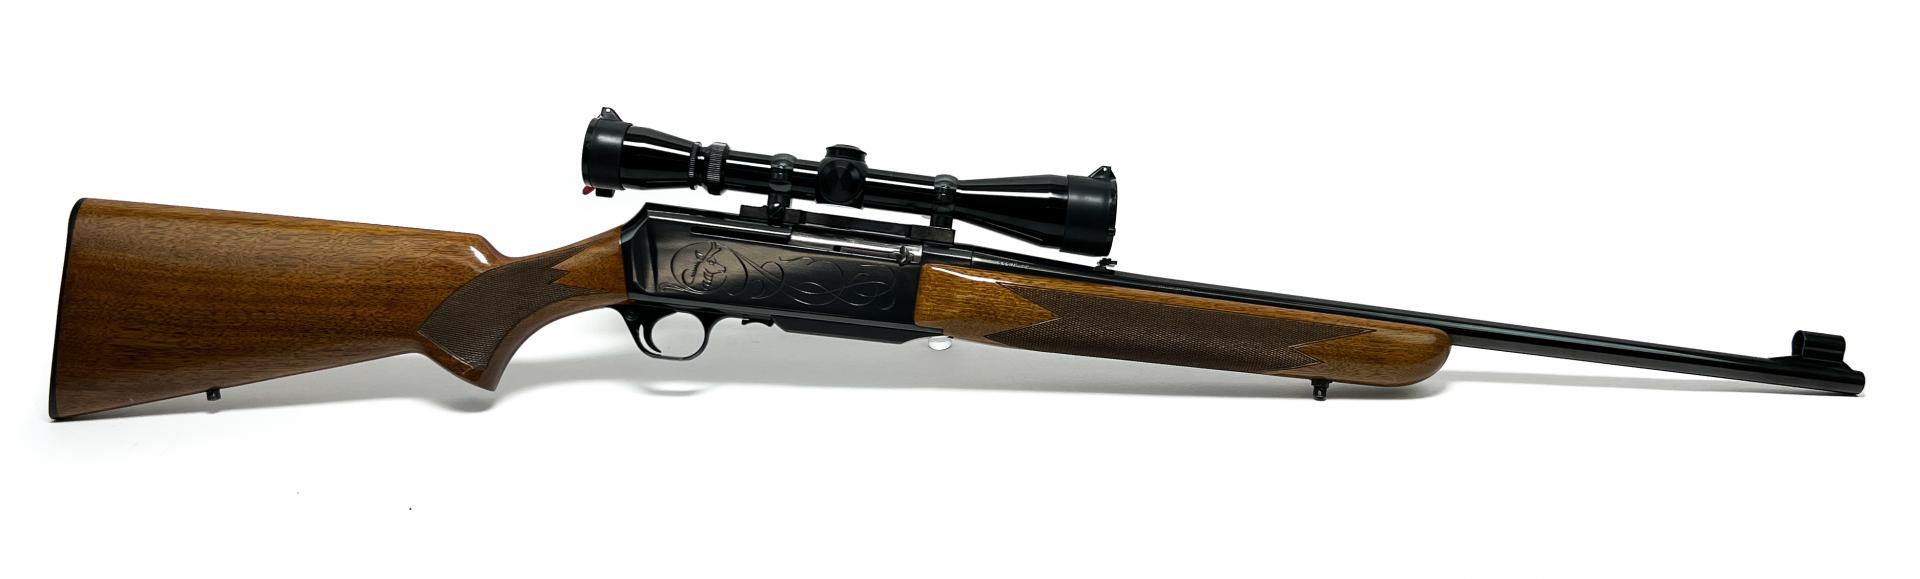 CONSIGNED Browning BAR Grade II 30-06 Unmarked FBRW92792 Long gun ...